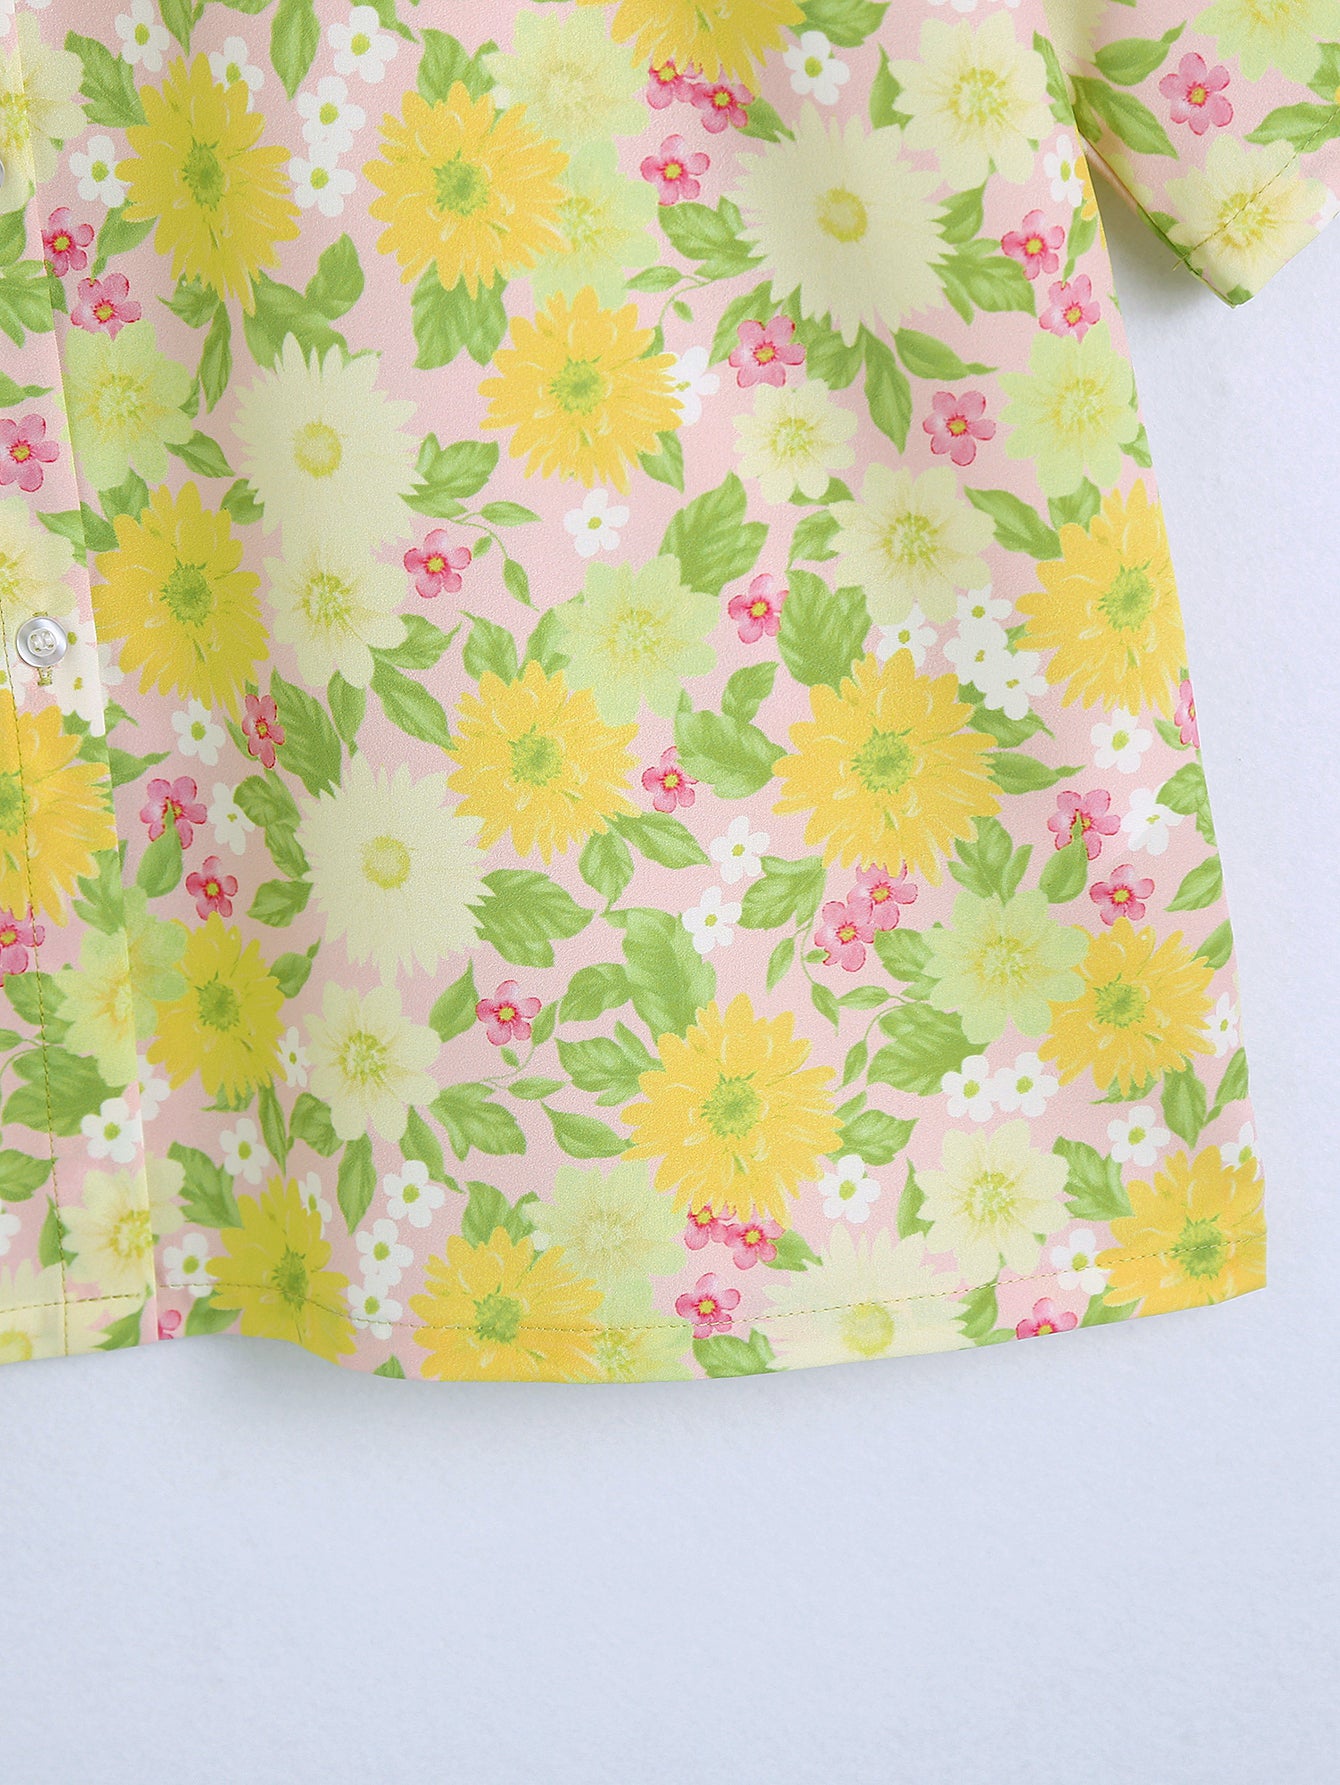 Summer New Fashion Retro Lapels Short Sleeve Single Breasted Yellow Printings Dress Female